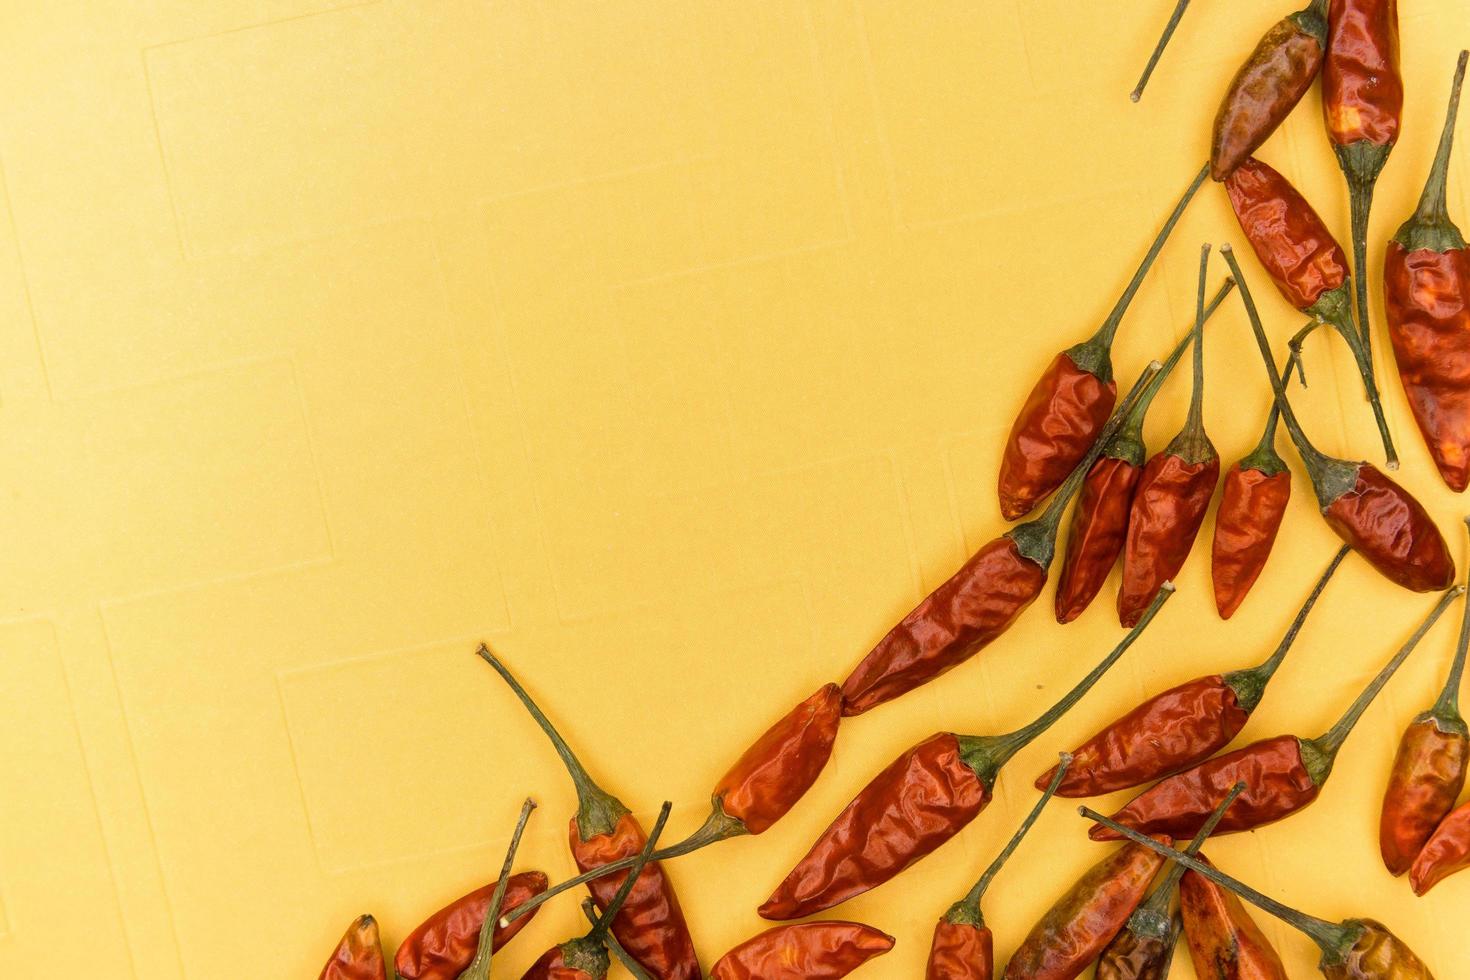 röd torkade chilipeppar på gul bakgrund foto